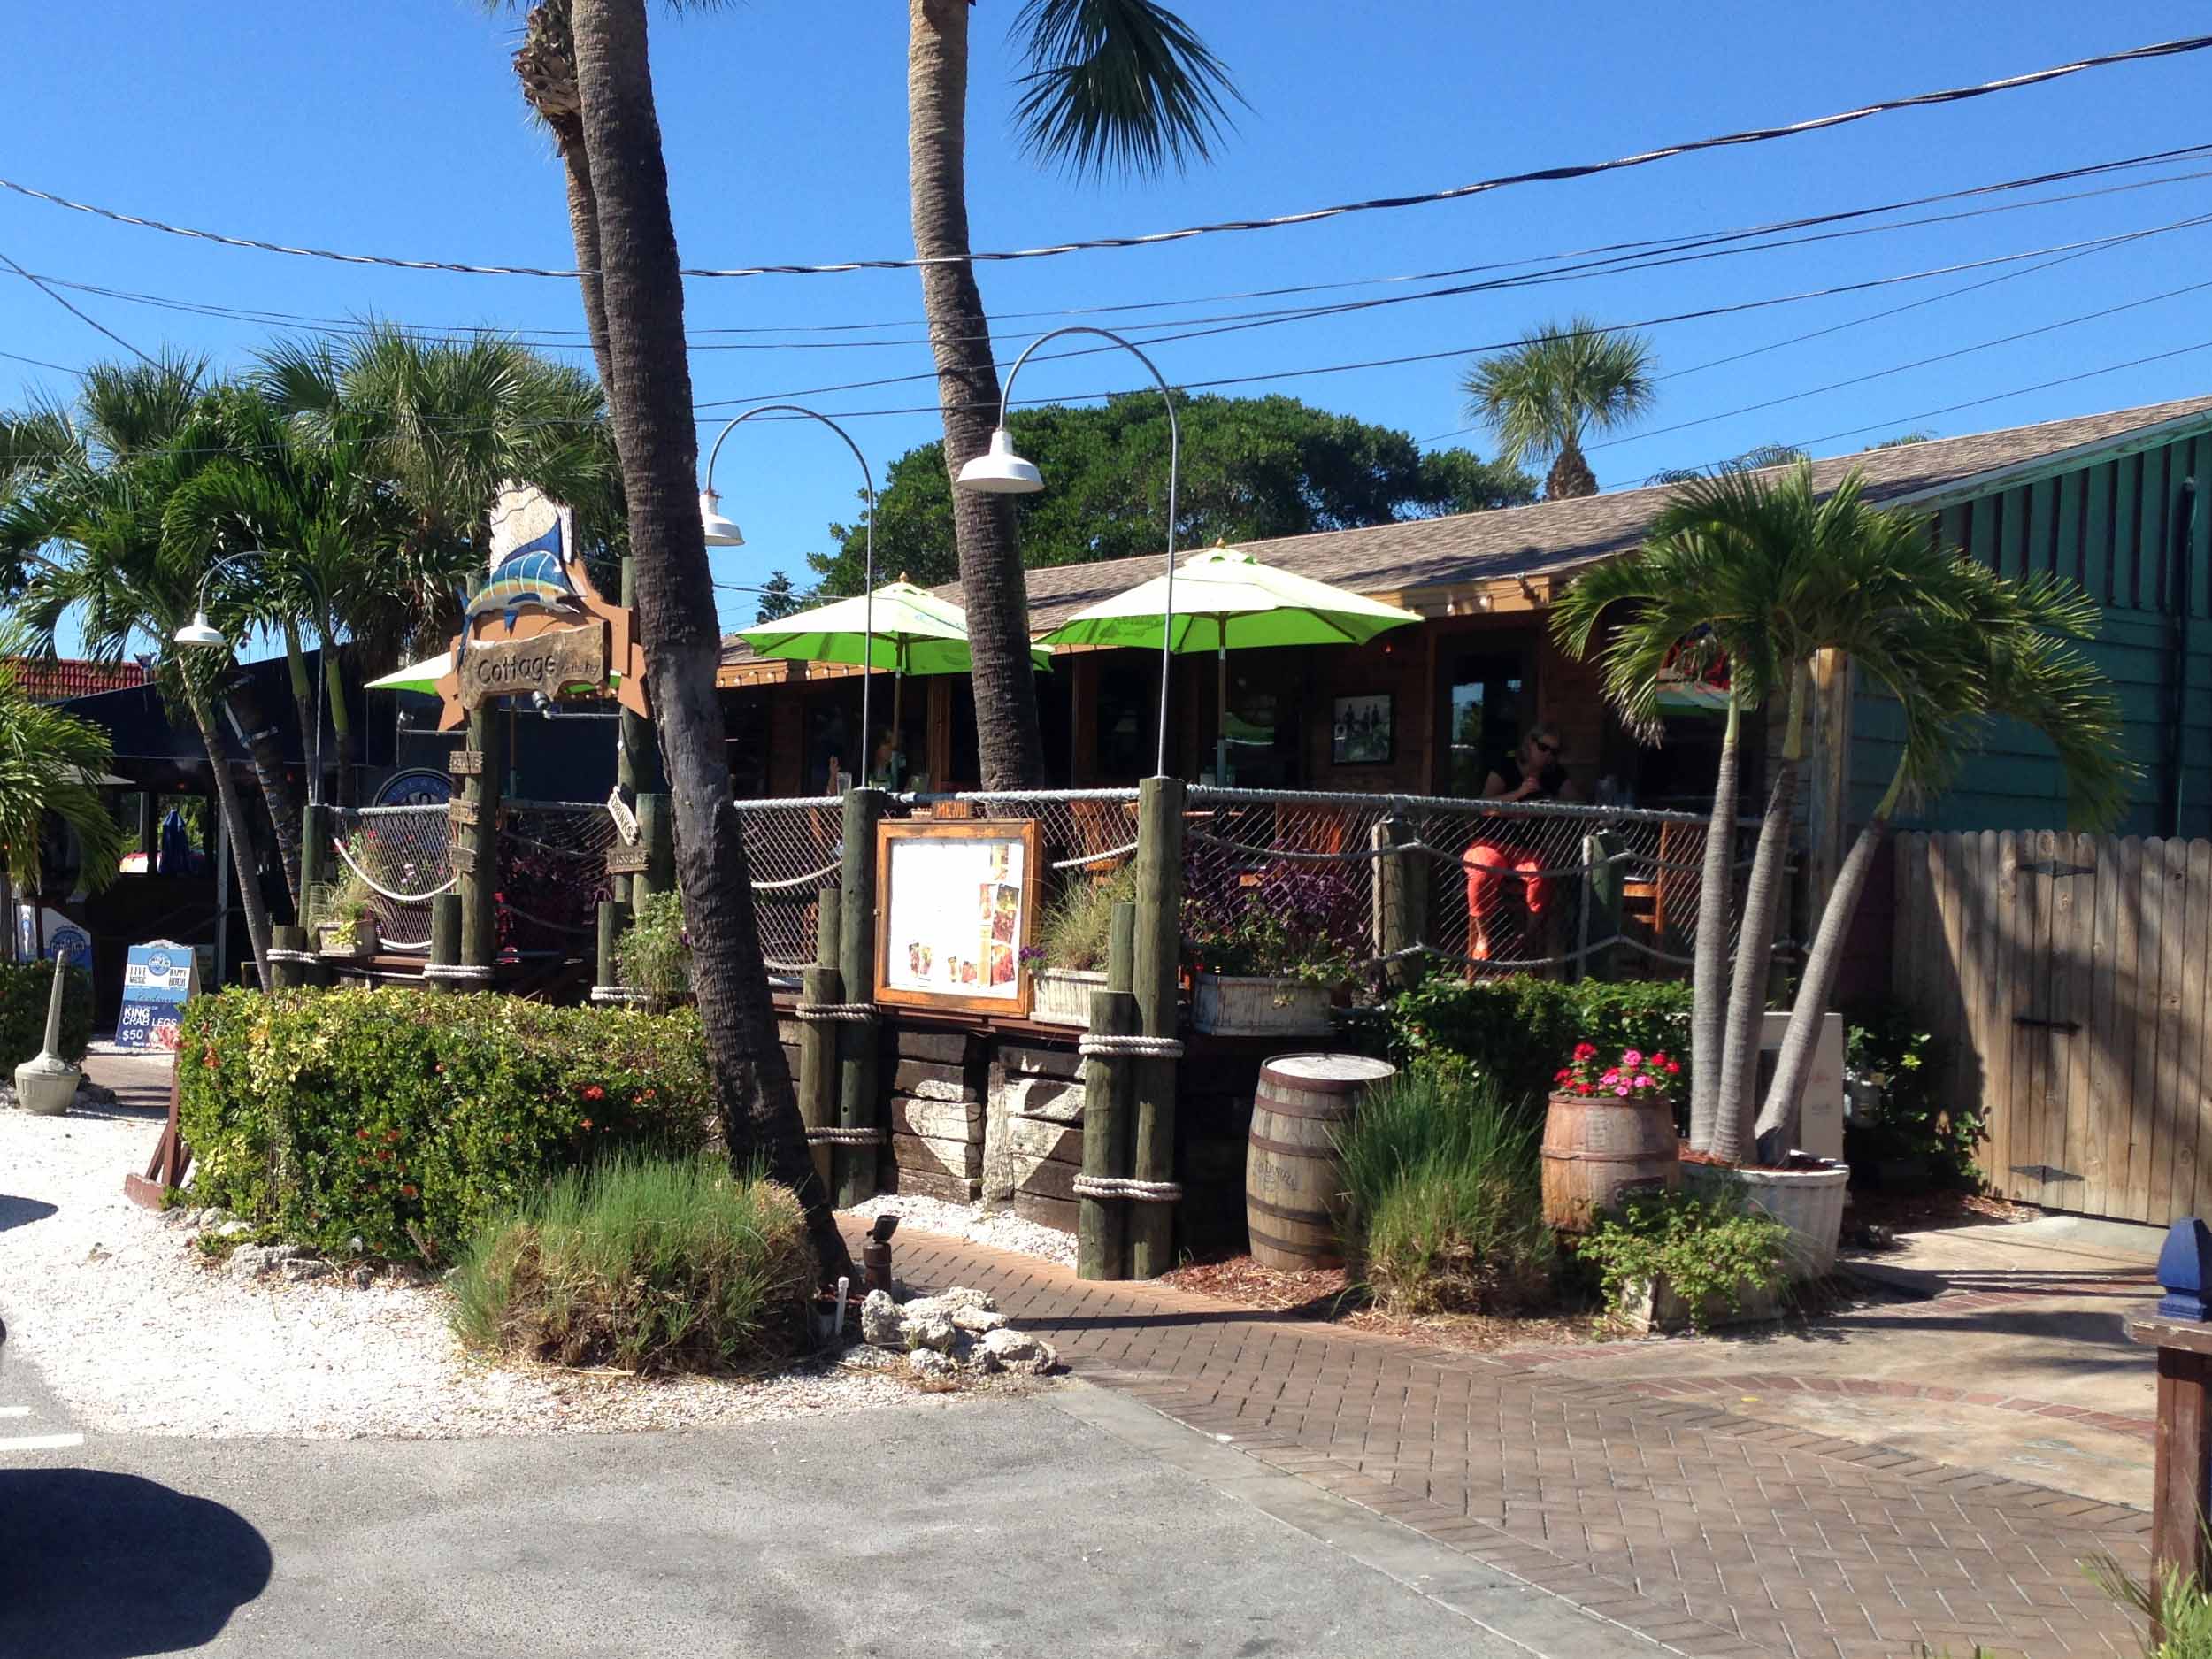 The Cottage Florida Beach Bar